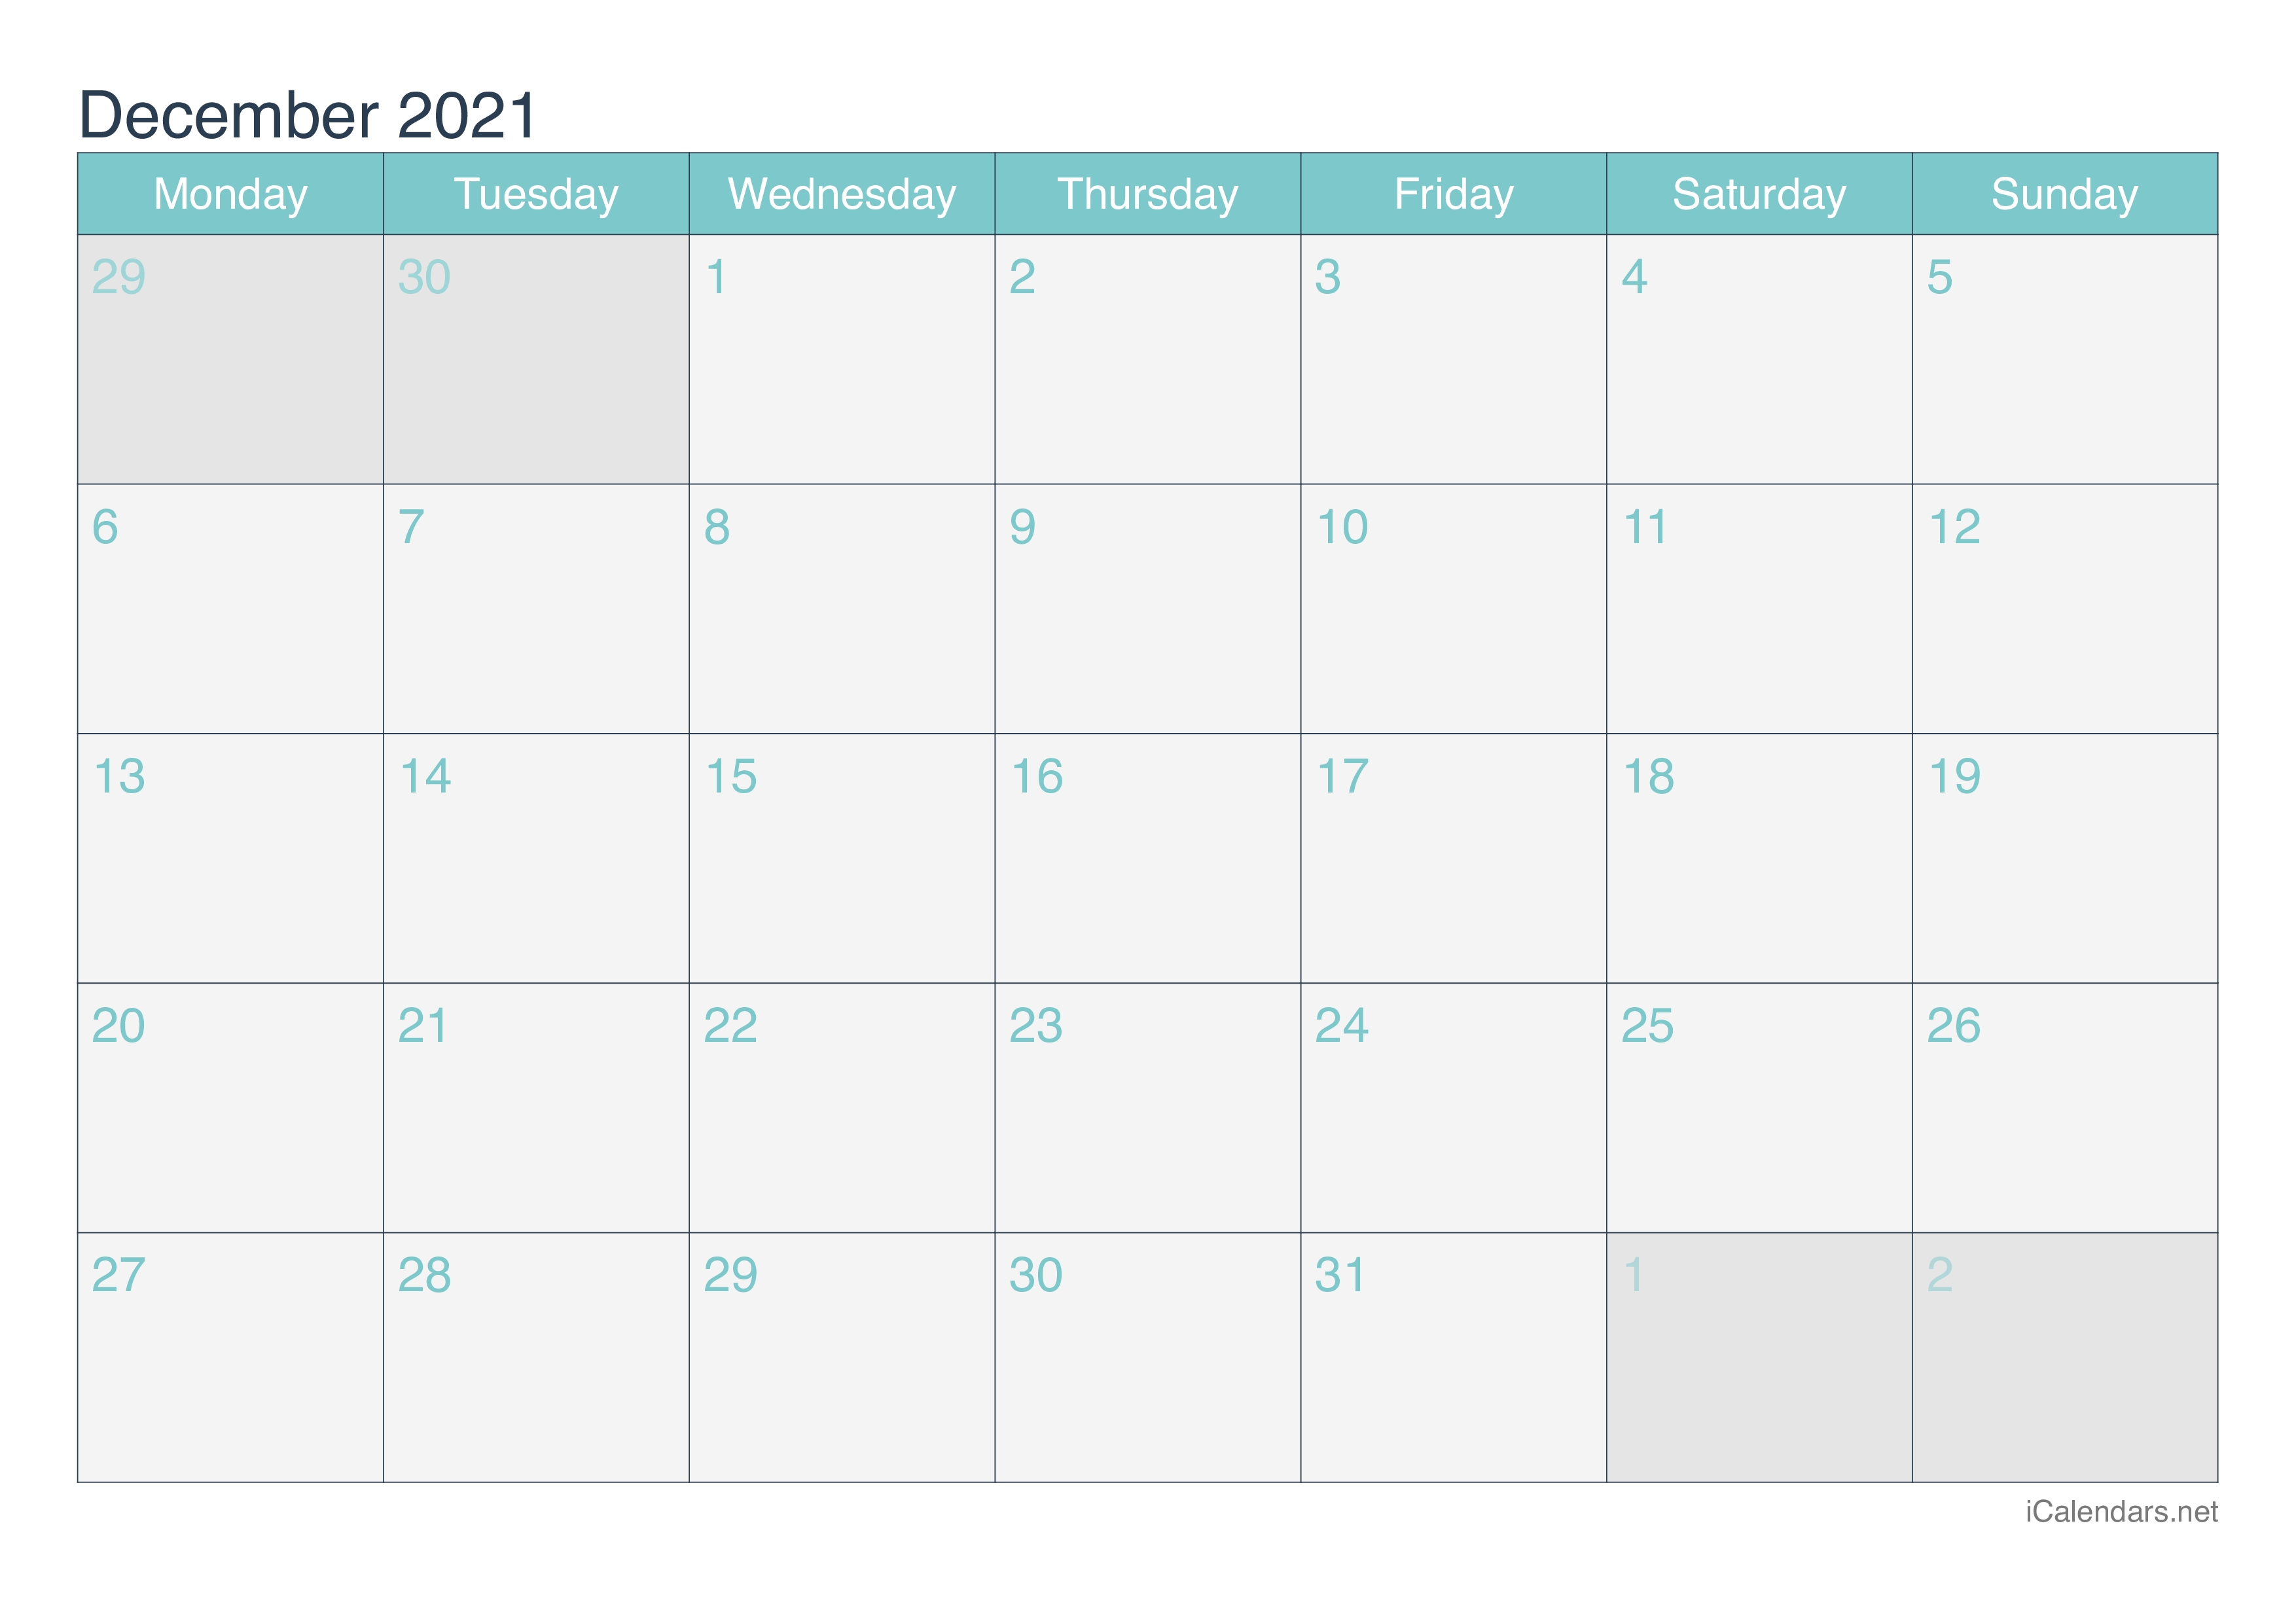 December 2021 Printable Calendar - Icalendars December 2021 Calendar Virus